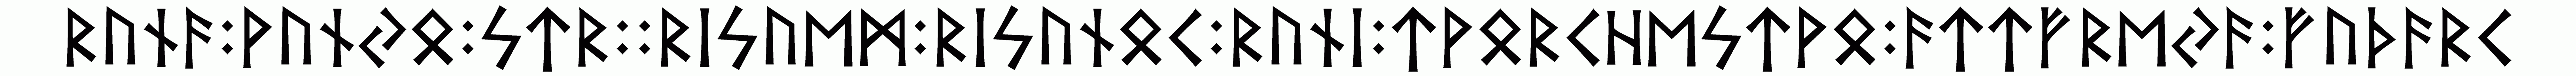 runa+wunjo+str+8+risuem+risunok+runi+tvorchestvo+attfreya+futhark - Напиши имя  РУНА+WUNJO+СТР+8+РИСУЕМ+РИСУНОК+РУНЫ+ТВОРЧЕСТВО+ATTFREYA+FUTHARK рунами  - ᚱᚢᚾᚨ:ᚹᚢᚾᛃᛟ:ᛋᛏᚱ::ᚱᛁᛋᚢᛖᛗ:ᚱᛁᛋᚢᚾᛟᚲ:ᚱᚢᚾᛁ:ᛏᚹᛟᚱᛏᚺᛖᛋᛏᚹᛟ:ᚨᛏᛏᚠᚱᛖᛃᚨ:ᚠᚢᛏᚺᚨᚱᚲ - Значение и характер имени  РУНА+WUNJO+СТР+8+РИСУЕМ+РИСУНОК+РУНЫ+ТВОРЧЕСТВО+ATTFREYA+FUTHARK - 